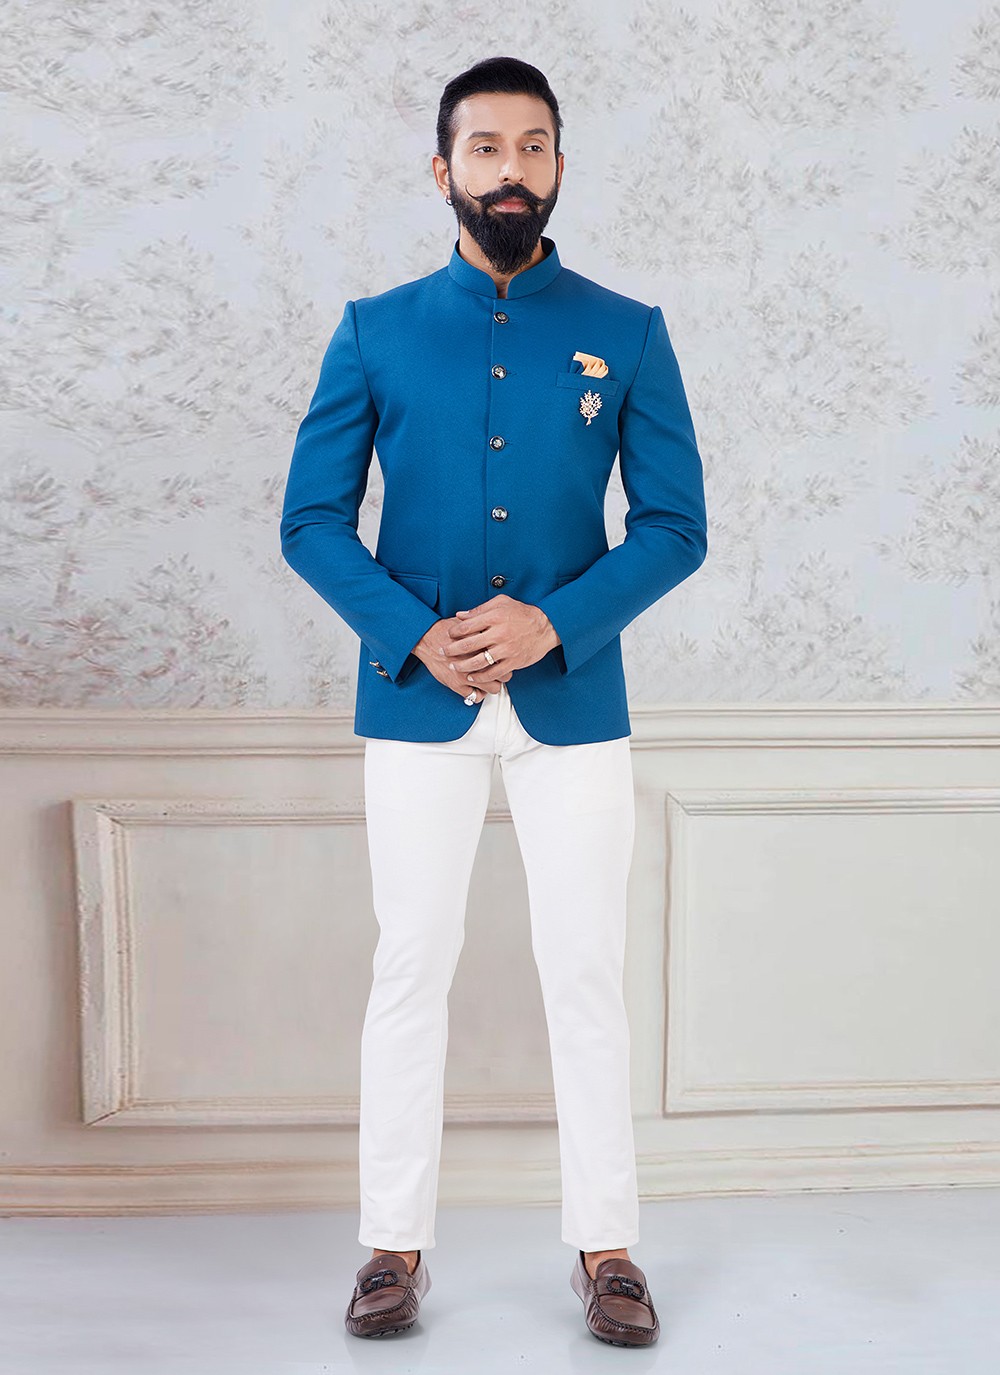 Jodhpuri Suit is A Smart and Comfortable Outfit for Men – Bonsoir